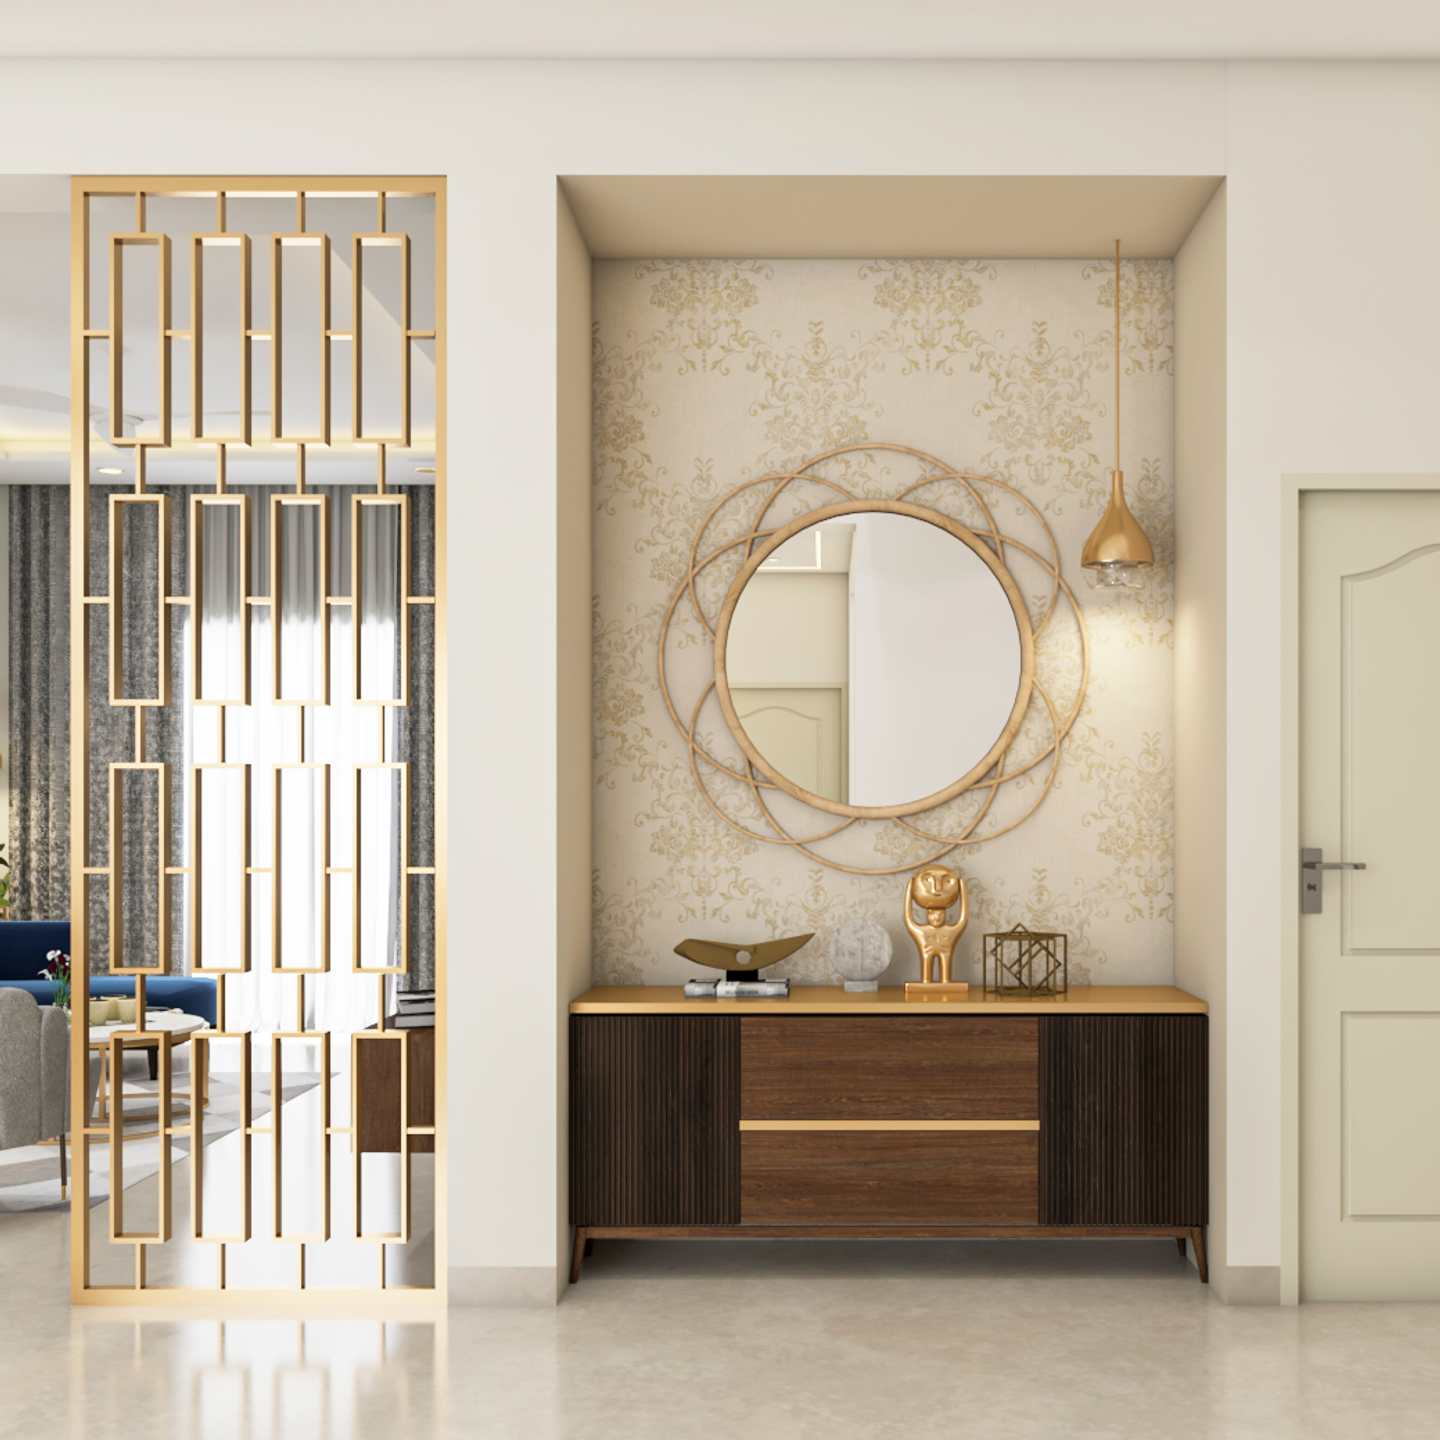 Golden Classic Compact Foyer Design Idea with Mirror - Livspace